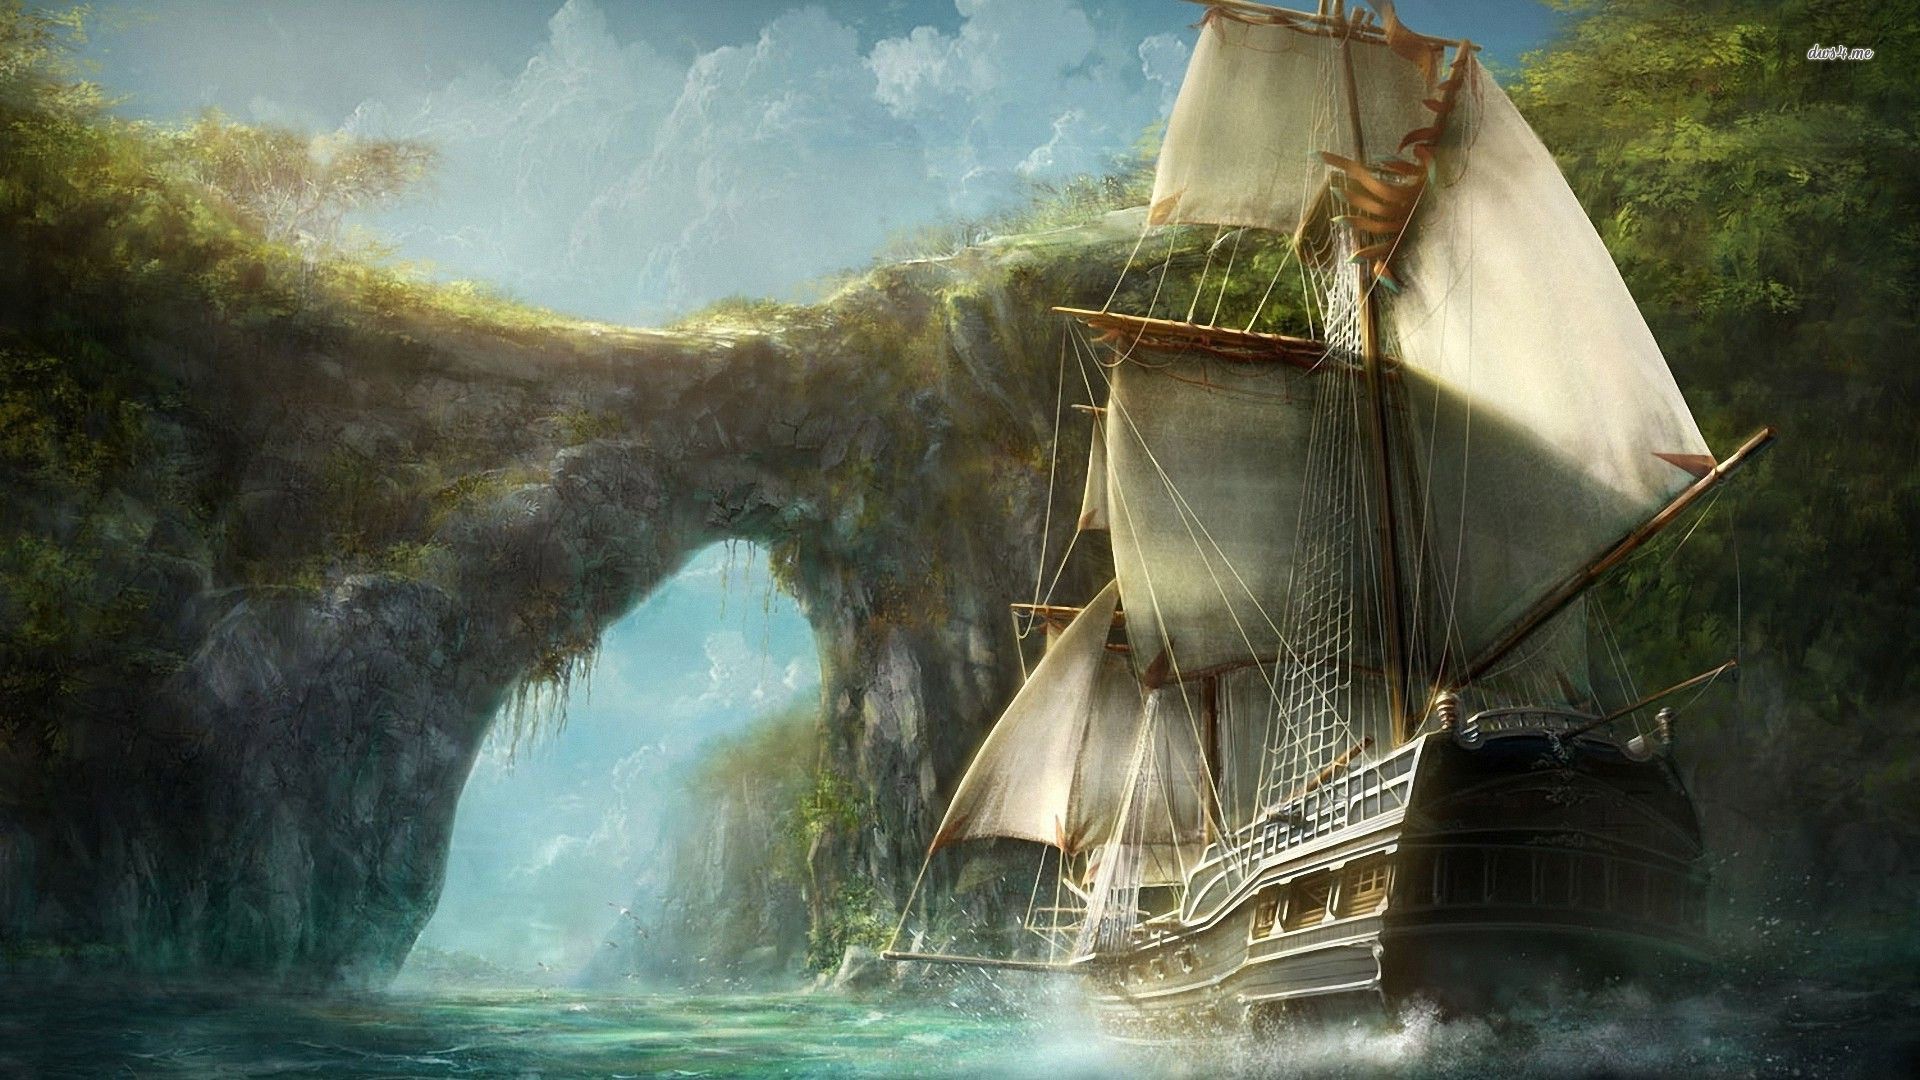 Medieval ship entering the island wallpaper - Fantasy wallpapers